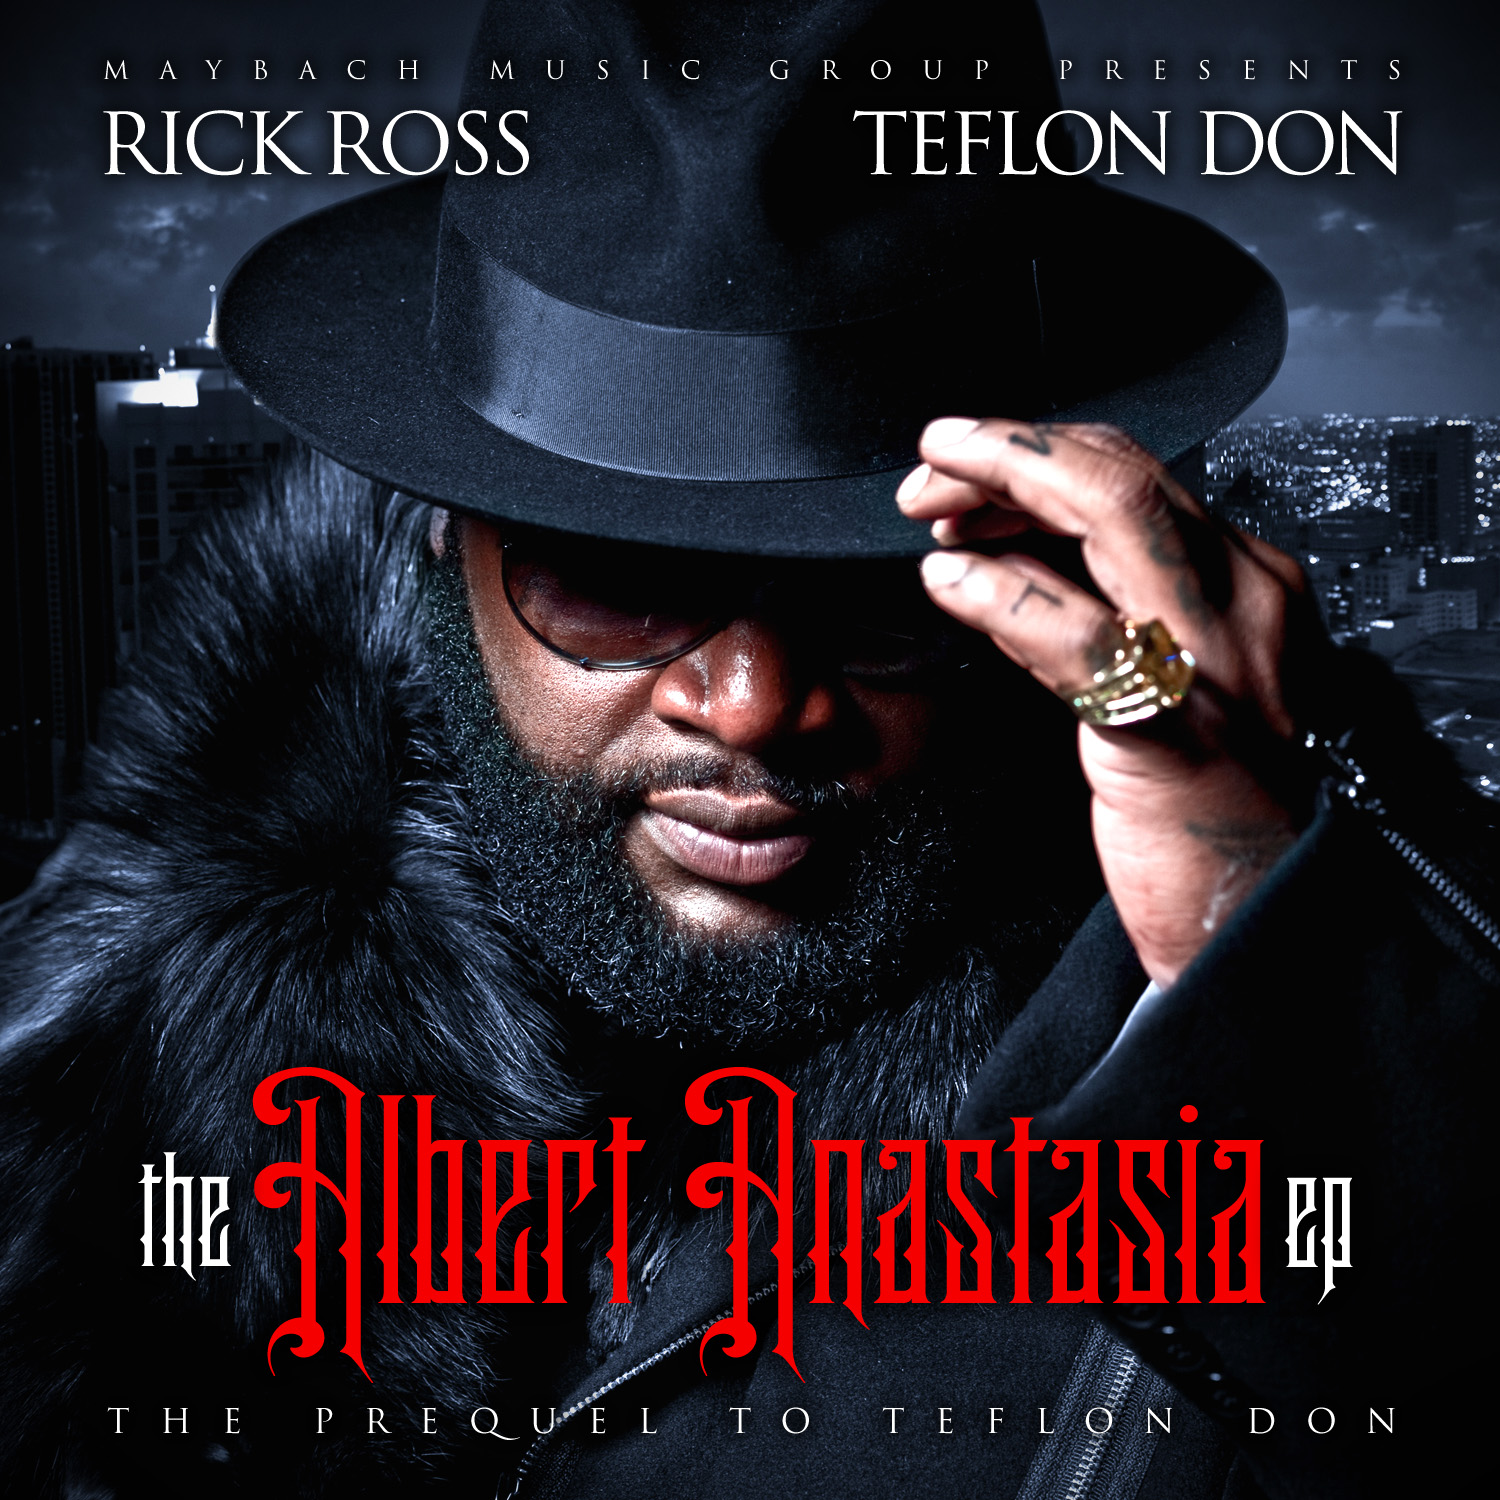 Album Review: Rick Ross-The Albert Anastasia EP